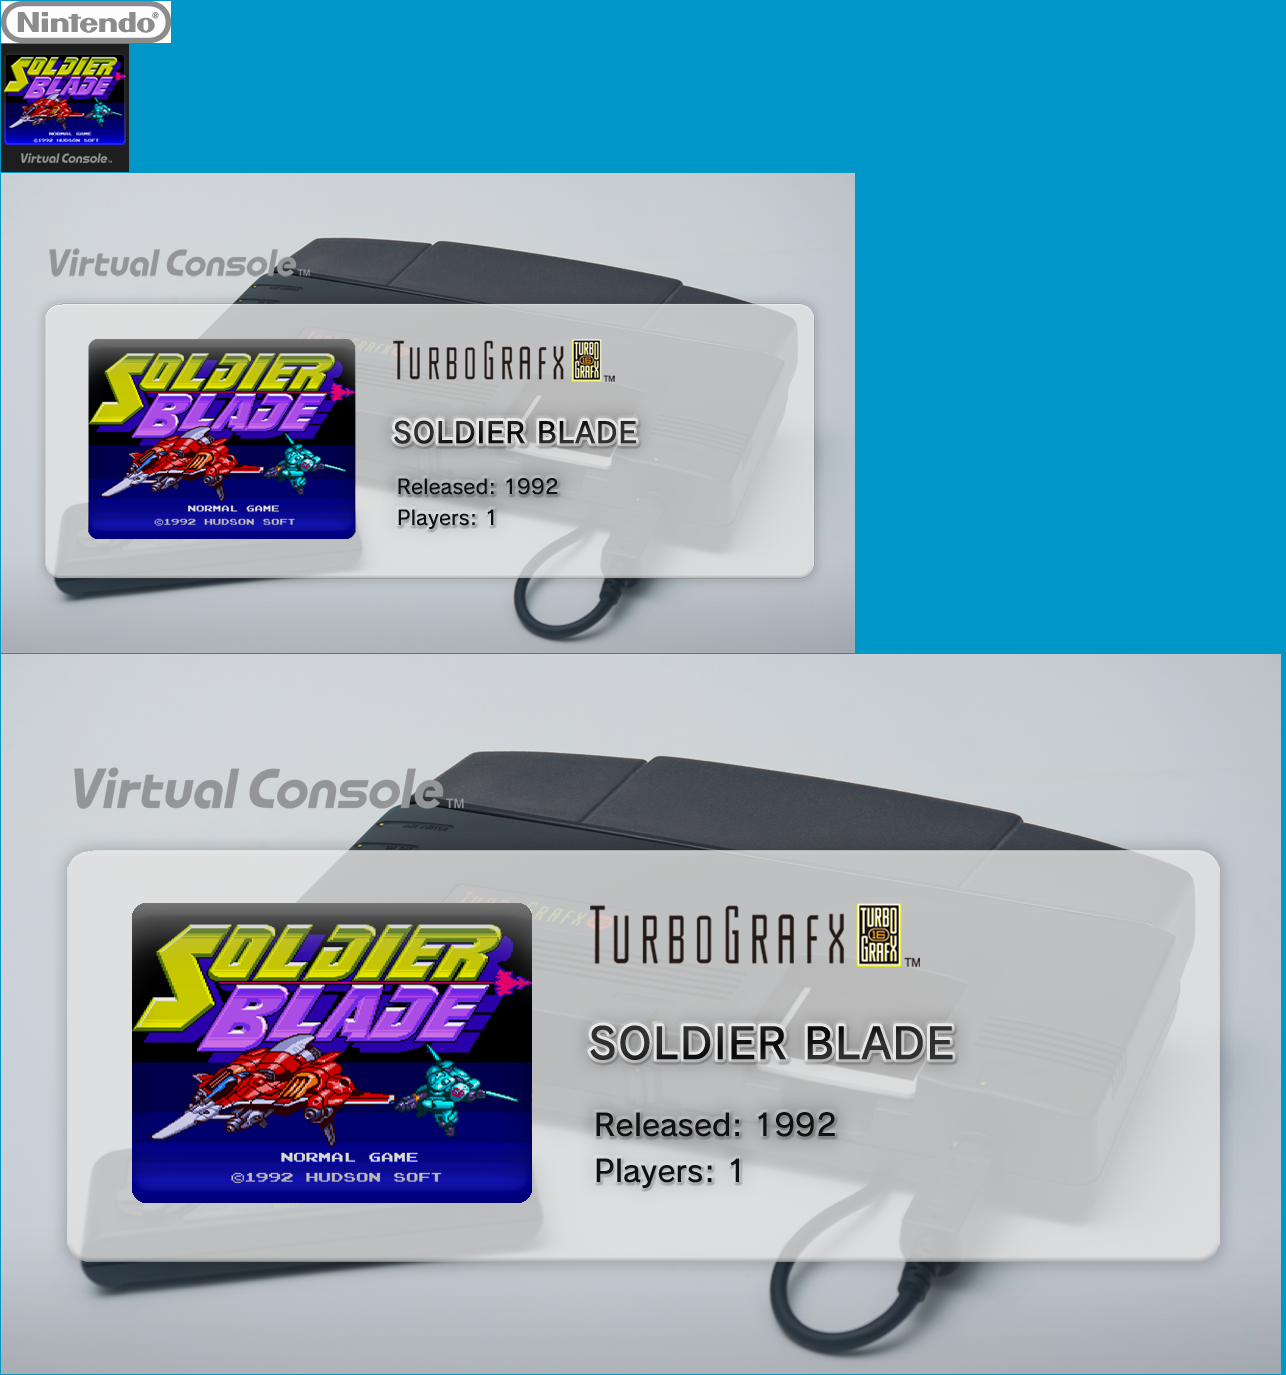 Virtual Console - SOLDIER BLADE